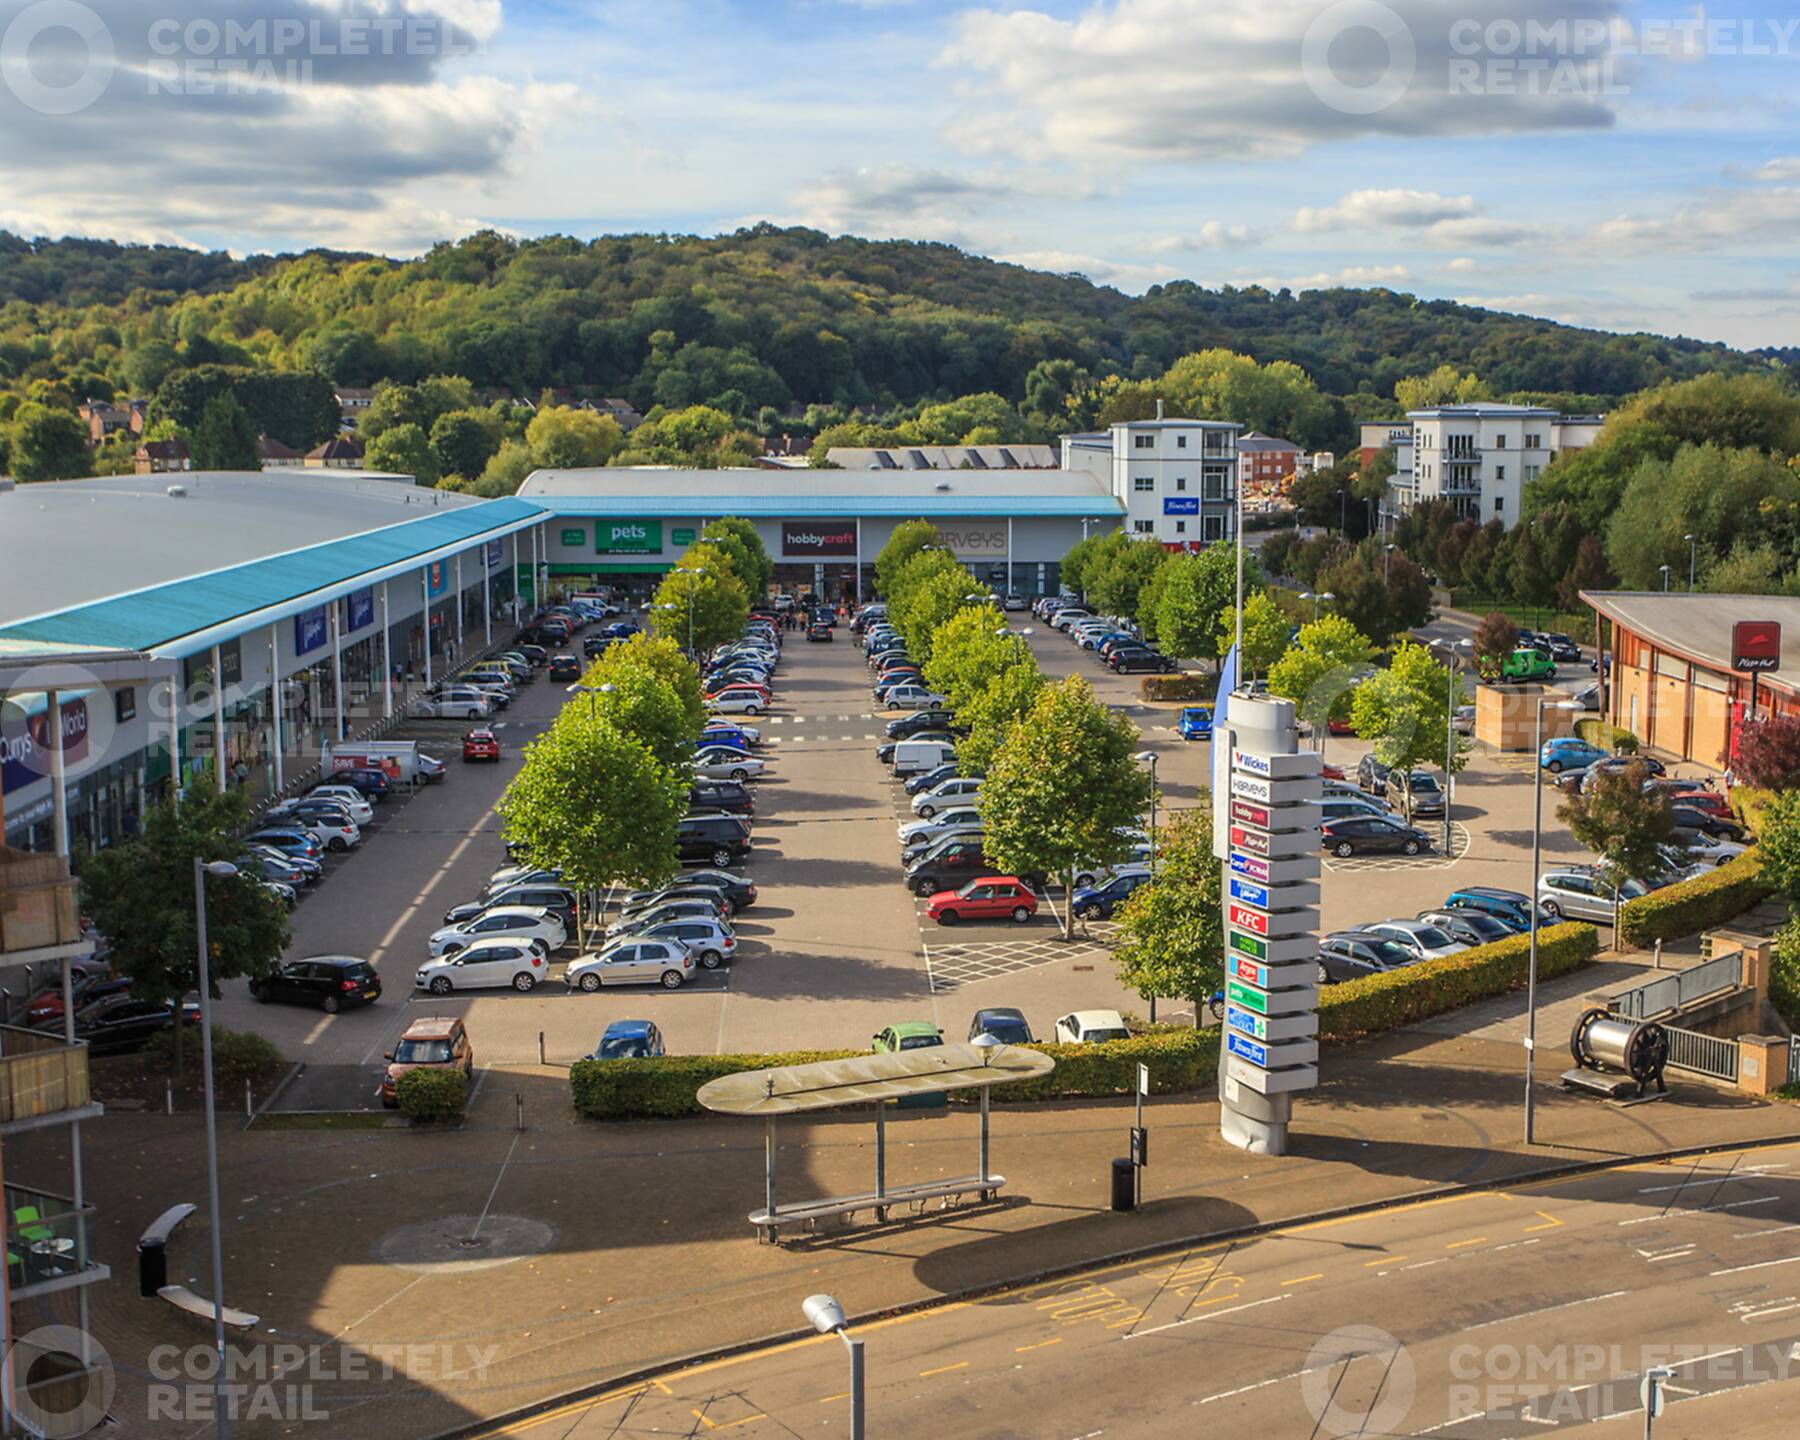 Wycombe Retail Park